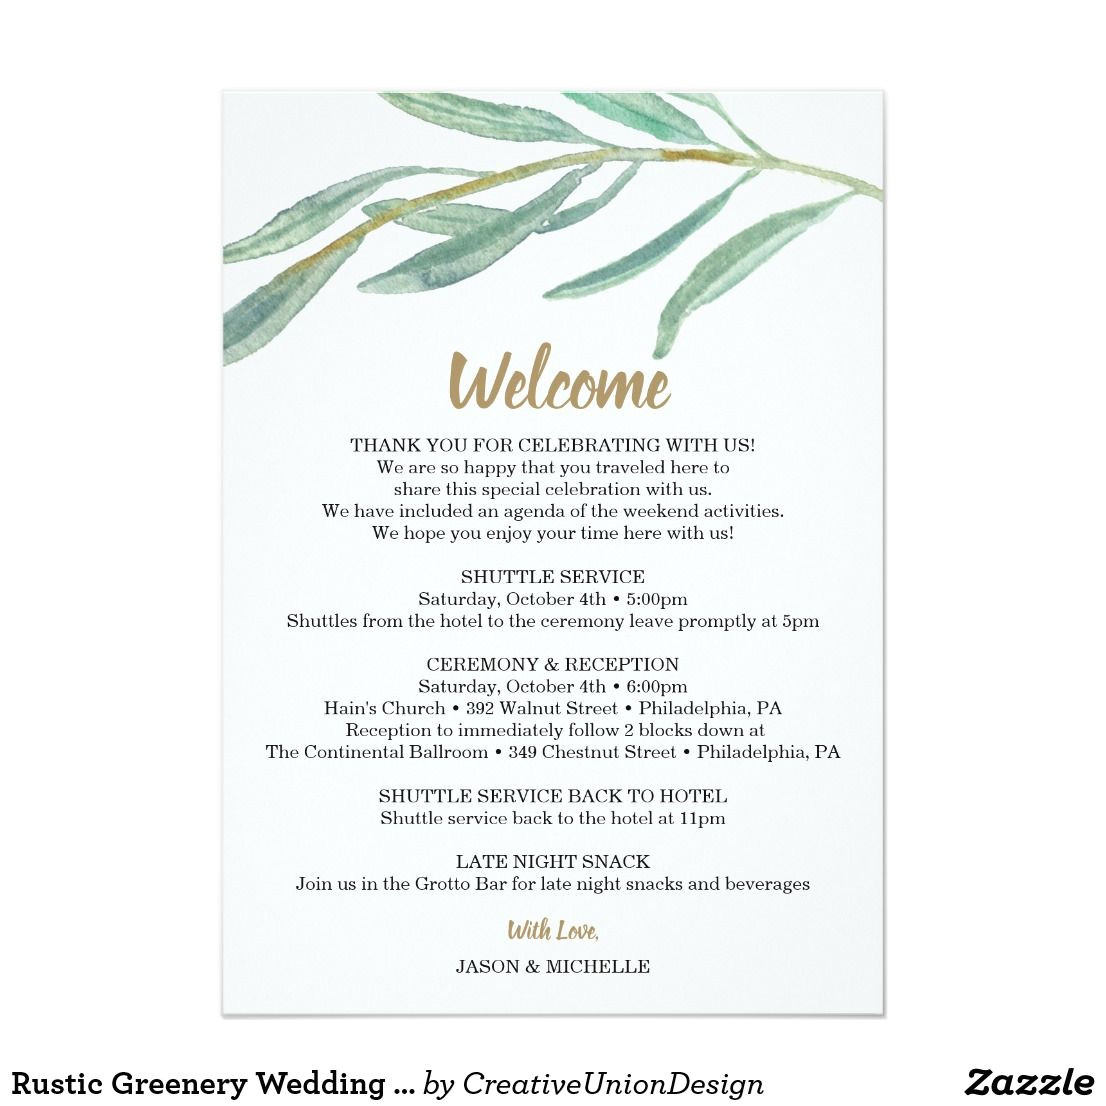 Late Thank You Card Wording Wedding Rustic Greenery Wedding Itinerary Wedding Welcome Program